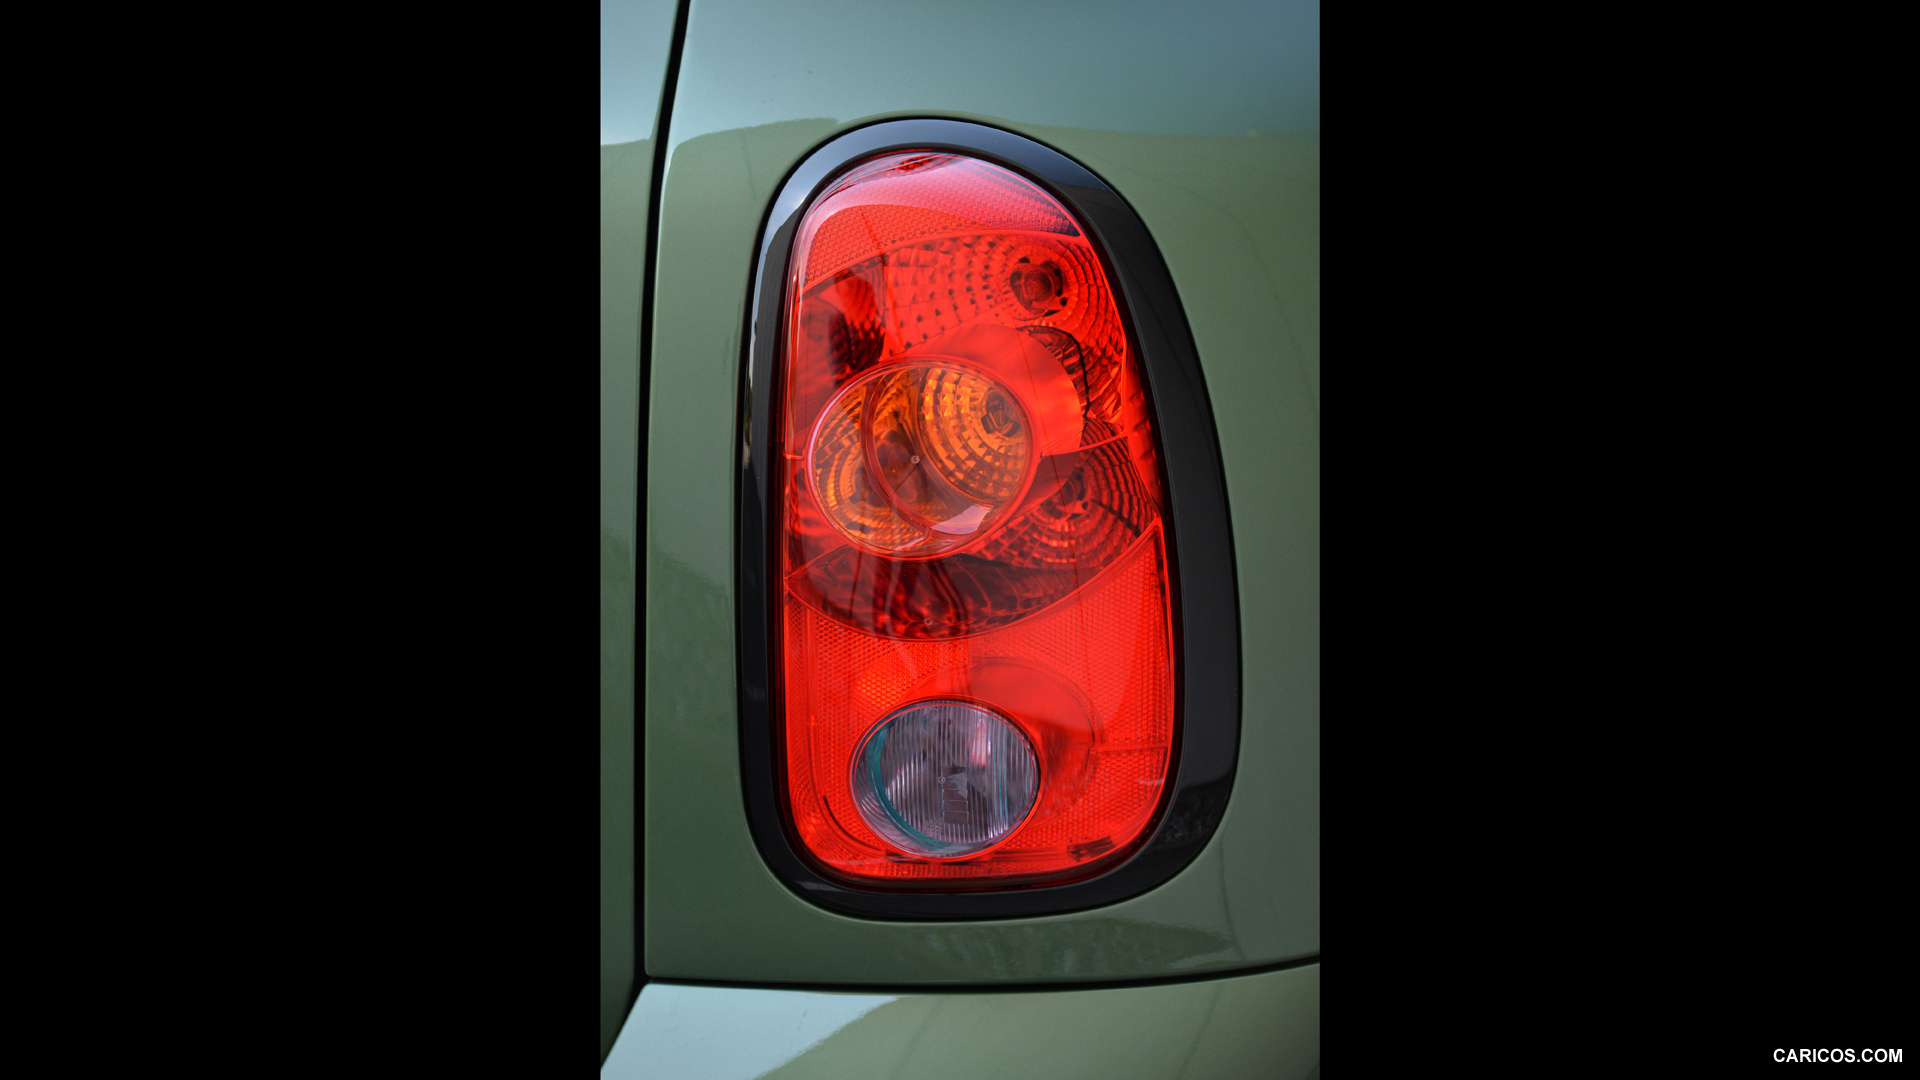 2015 MINI Cooper S Countryman  - Tail Light, #228 of 291